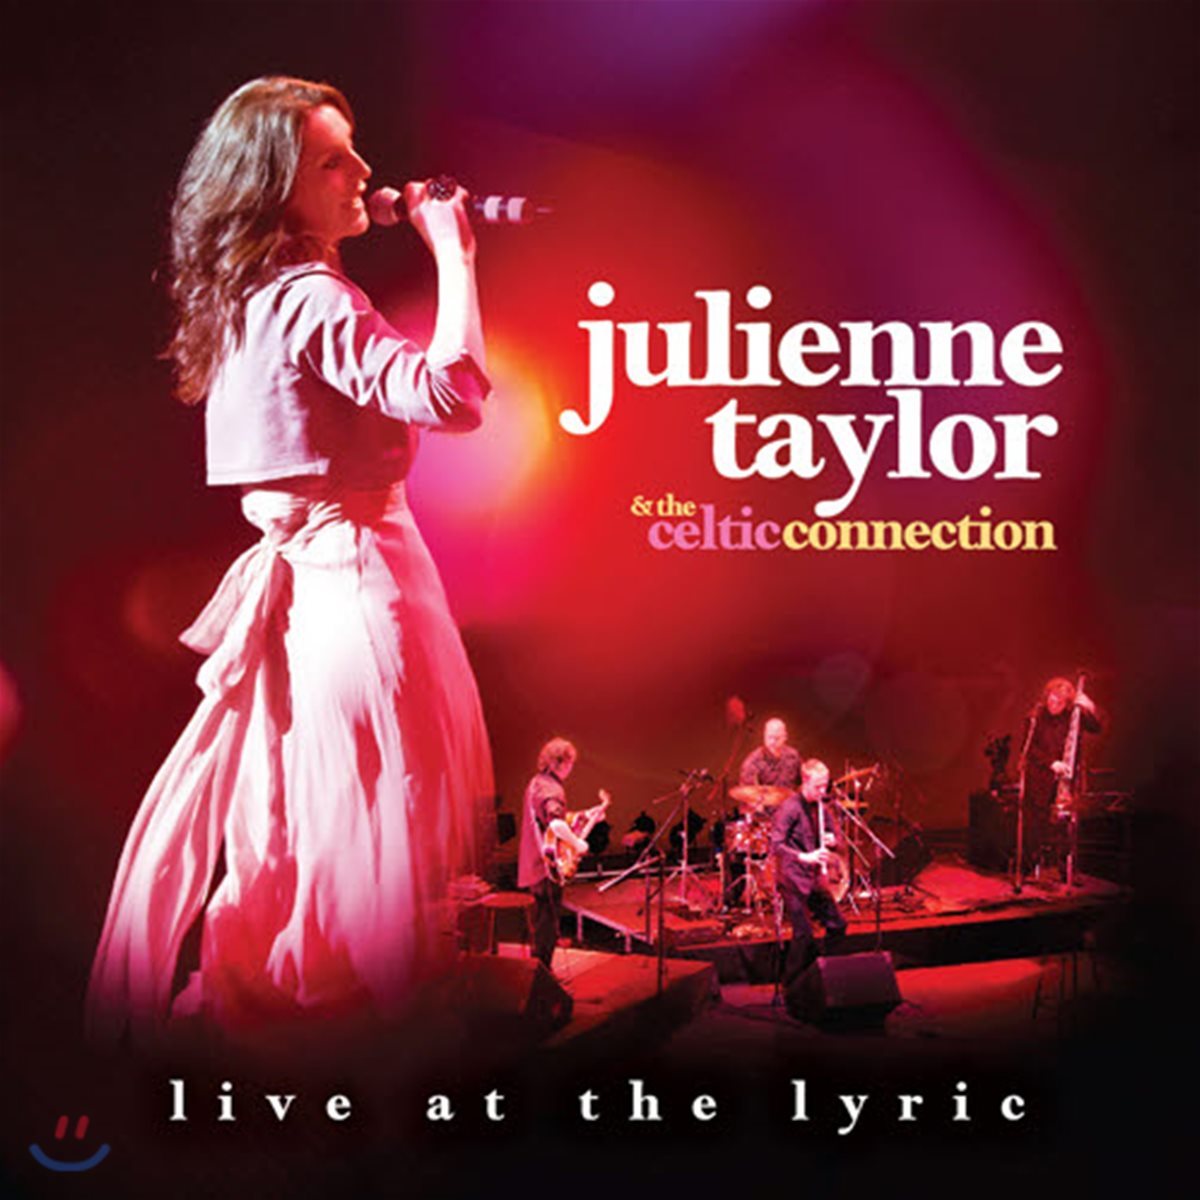 Julienne Taylor & The Celtic Connection - Live At the Lyric (줄리언 테일러 앤 더 셀틱 커넥션 - 2012년 리릭 씨어터 라이브)